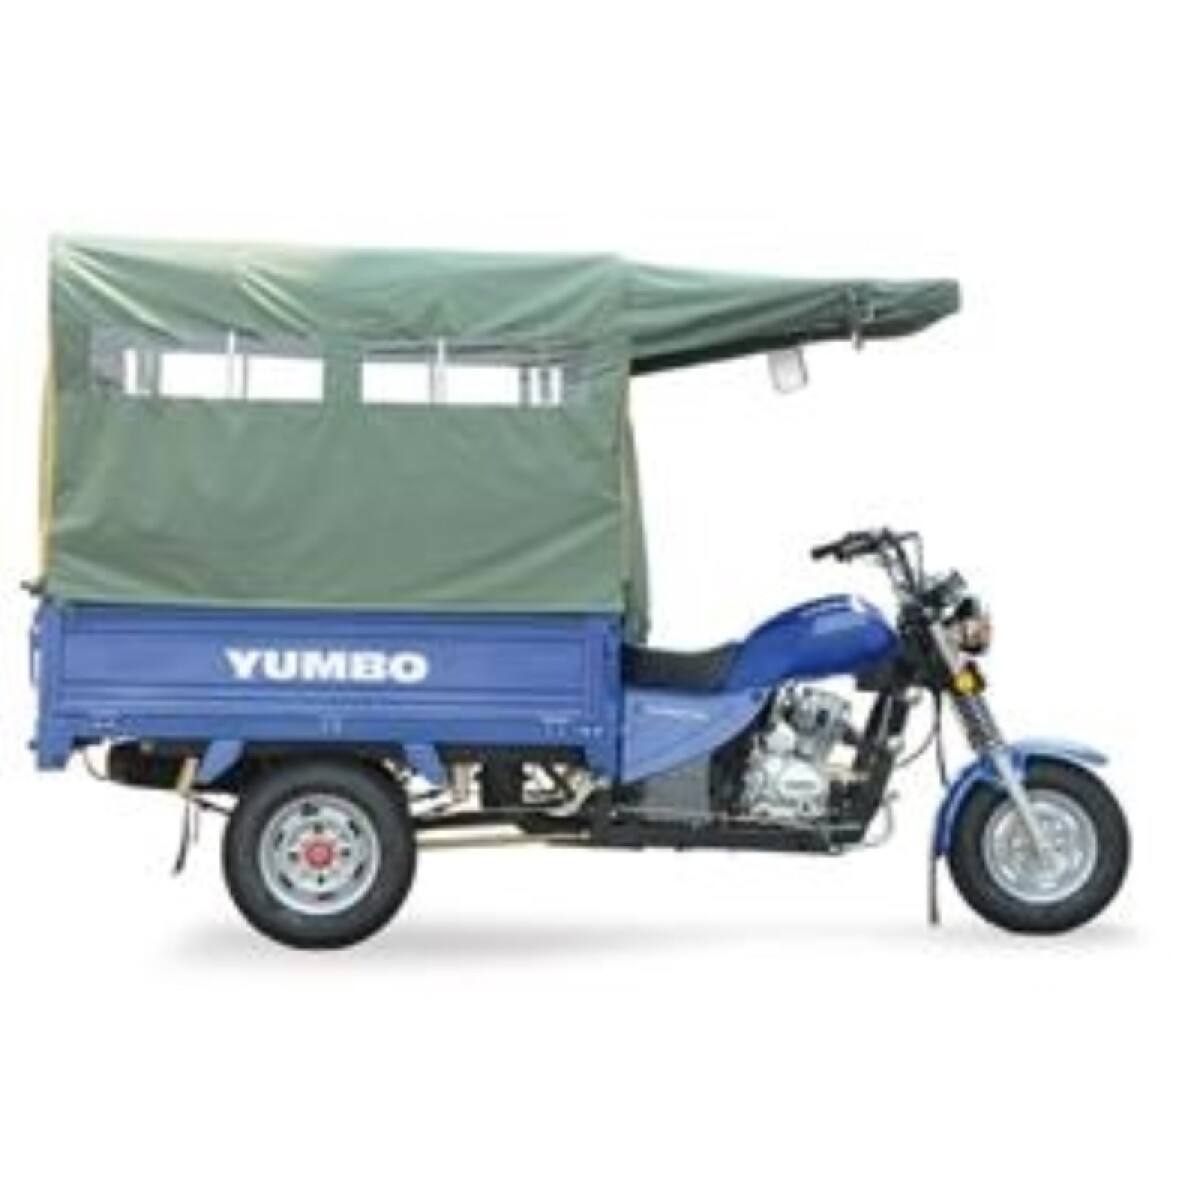 Moto Yumbo Cargo Triciclo 125cc.ii 